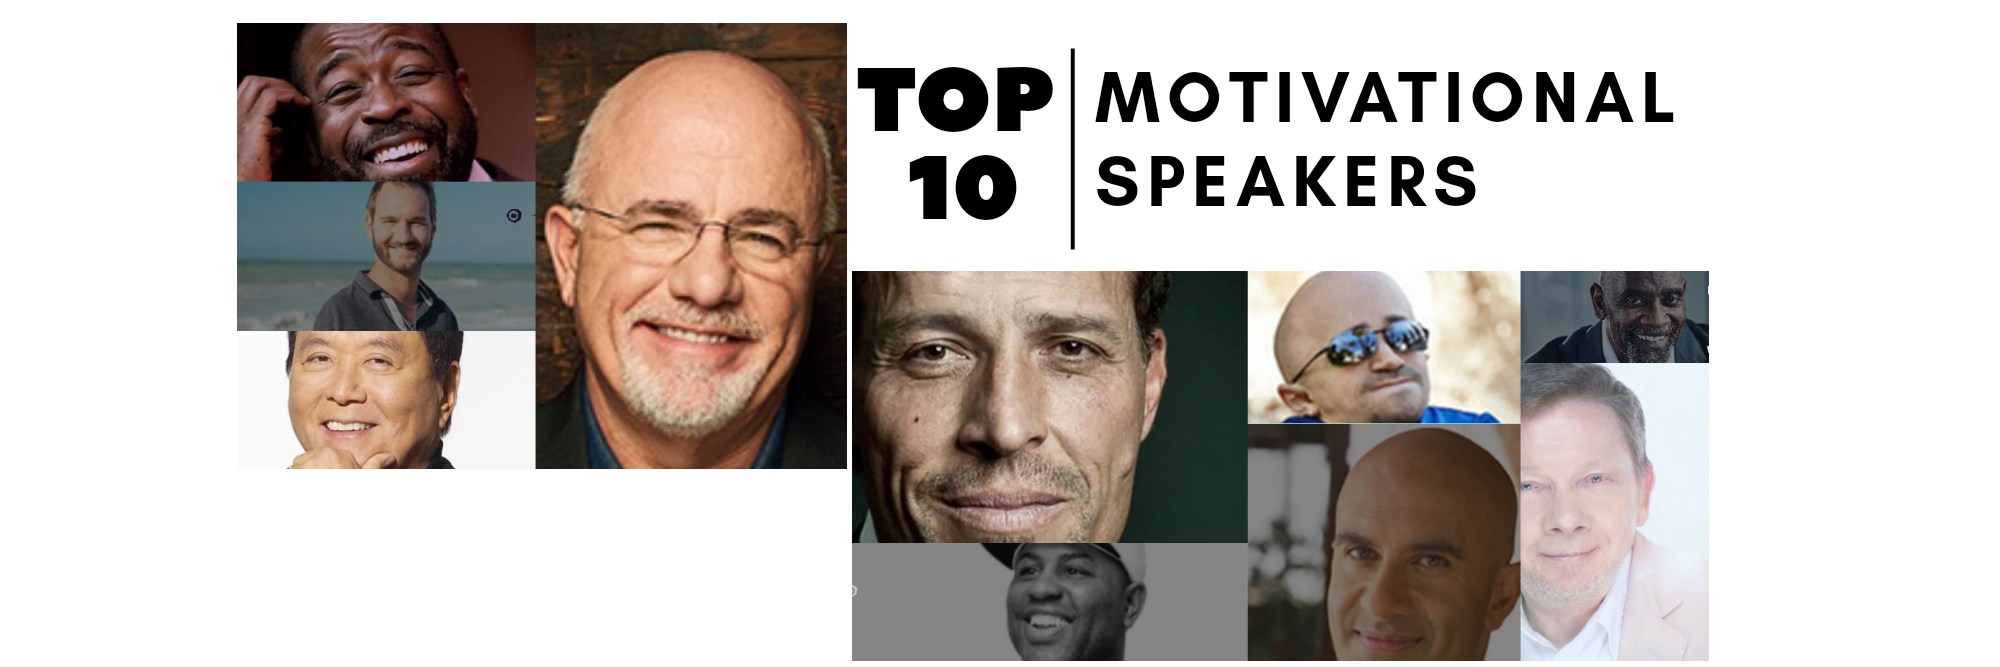 Top 17 Motivational Speakers In 2021 - Motivational Speakers